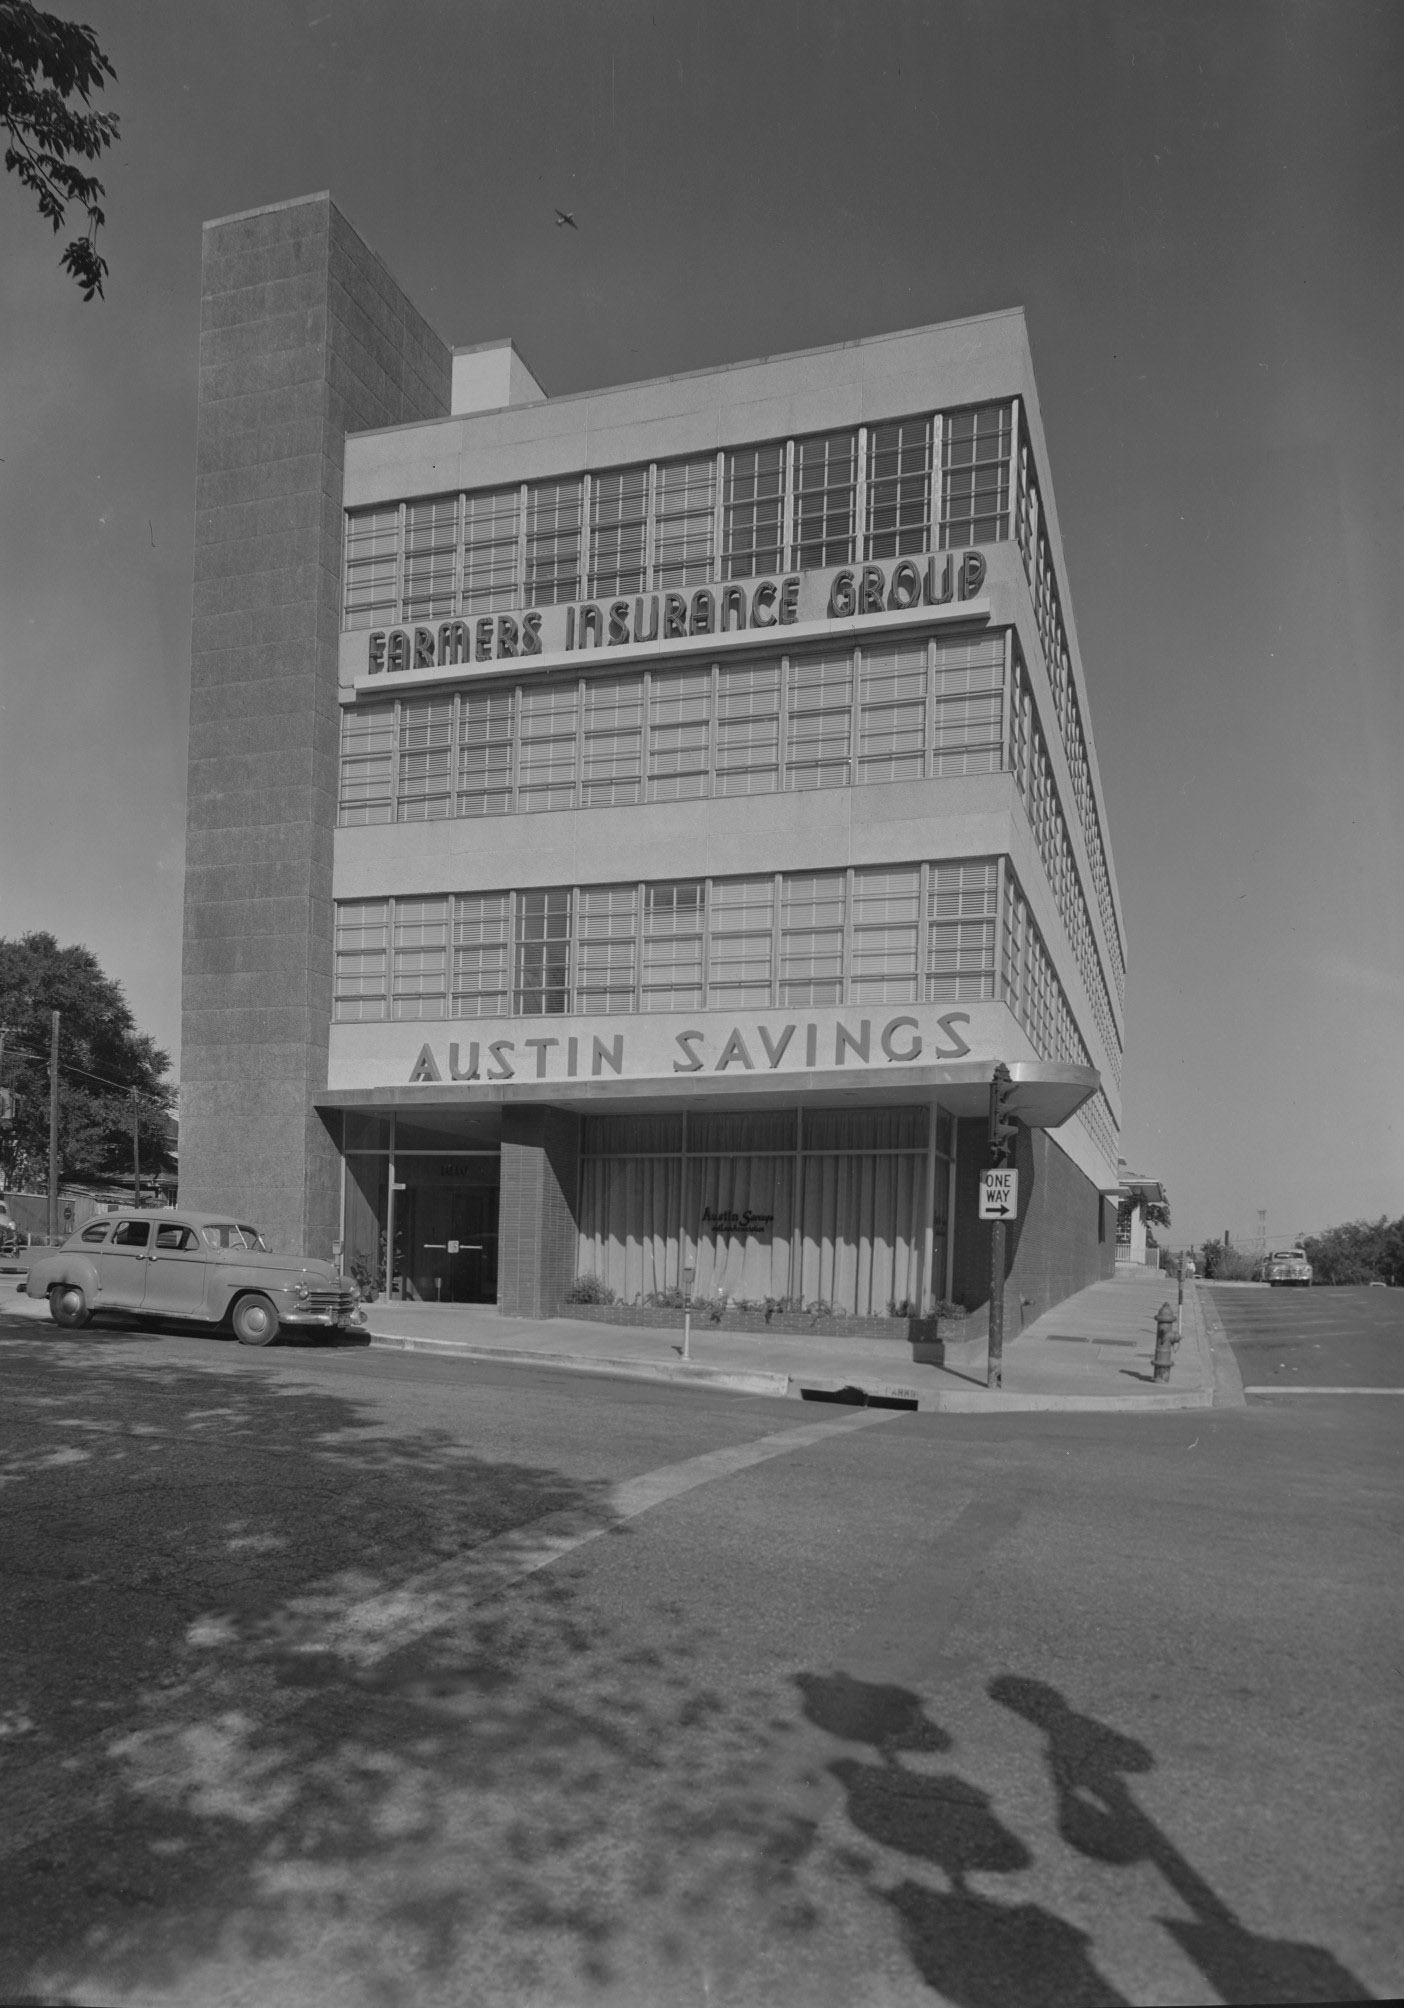 Building Housing Farmers Insurance and Austin Savings, 1952